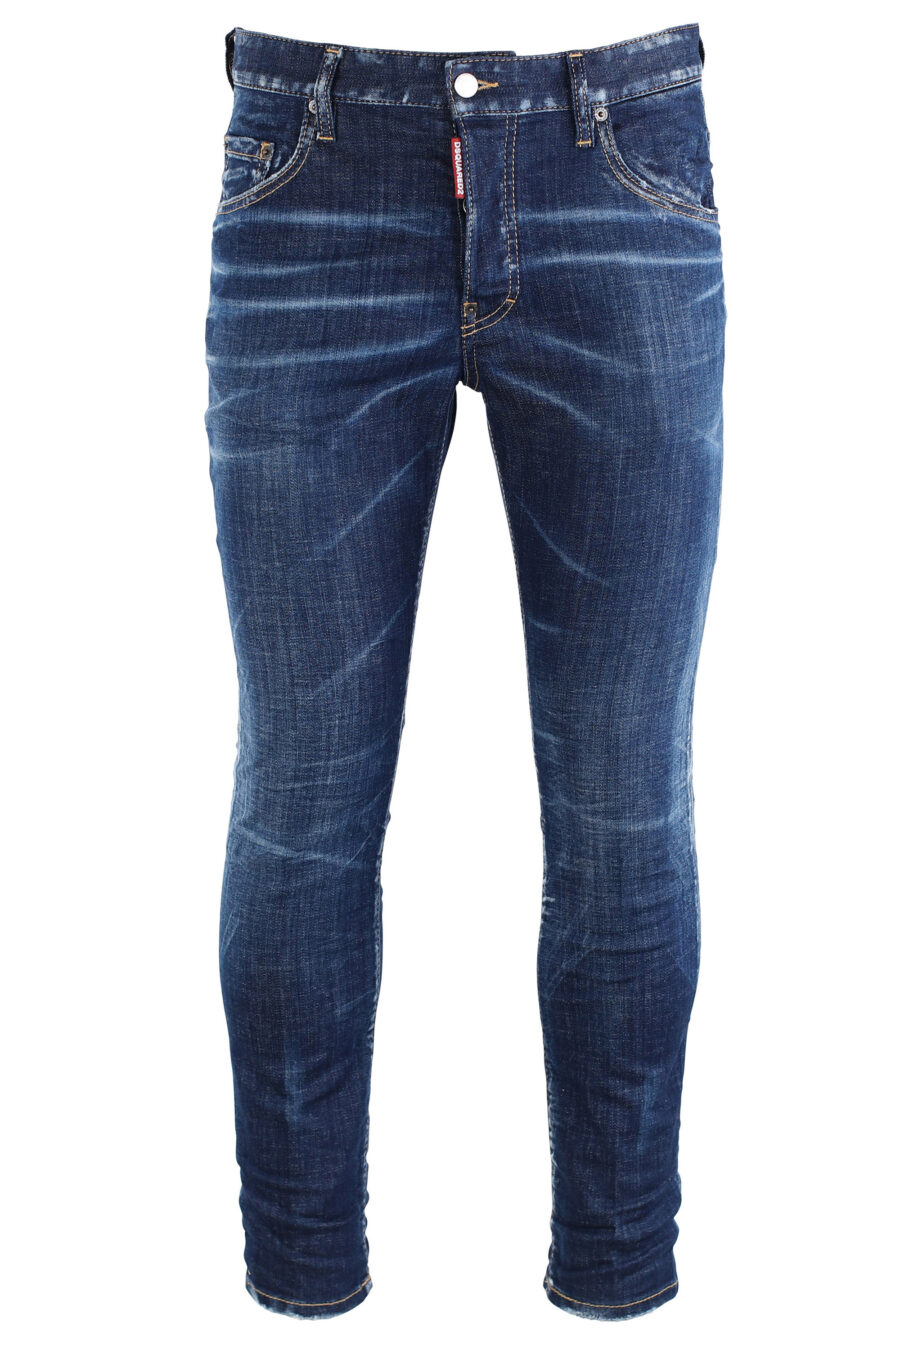 Pantalon en denim "24 seven skater jean" bleu semi-usé - IMG 1612